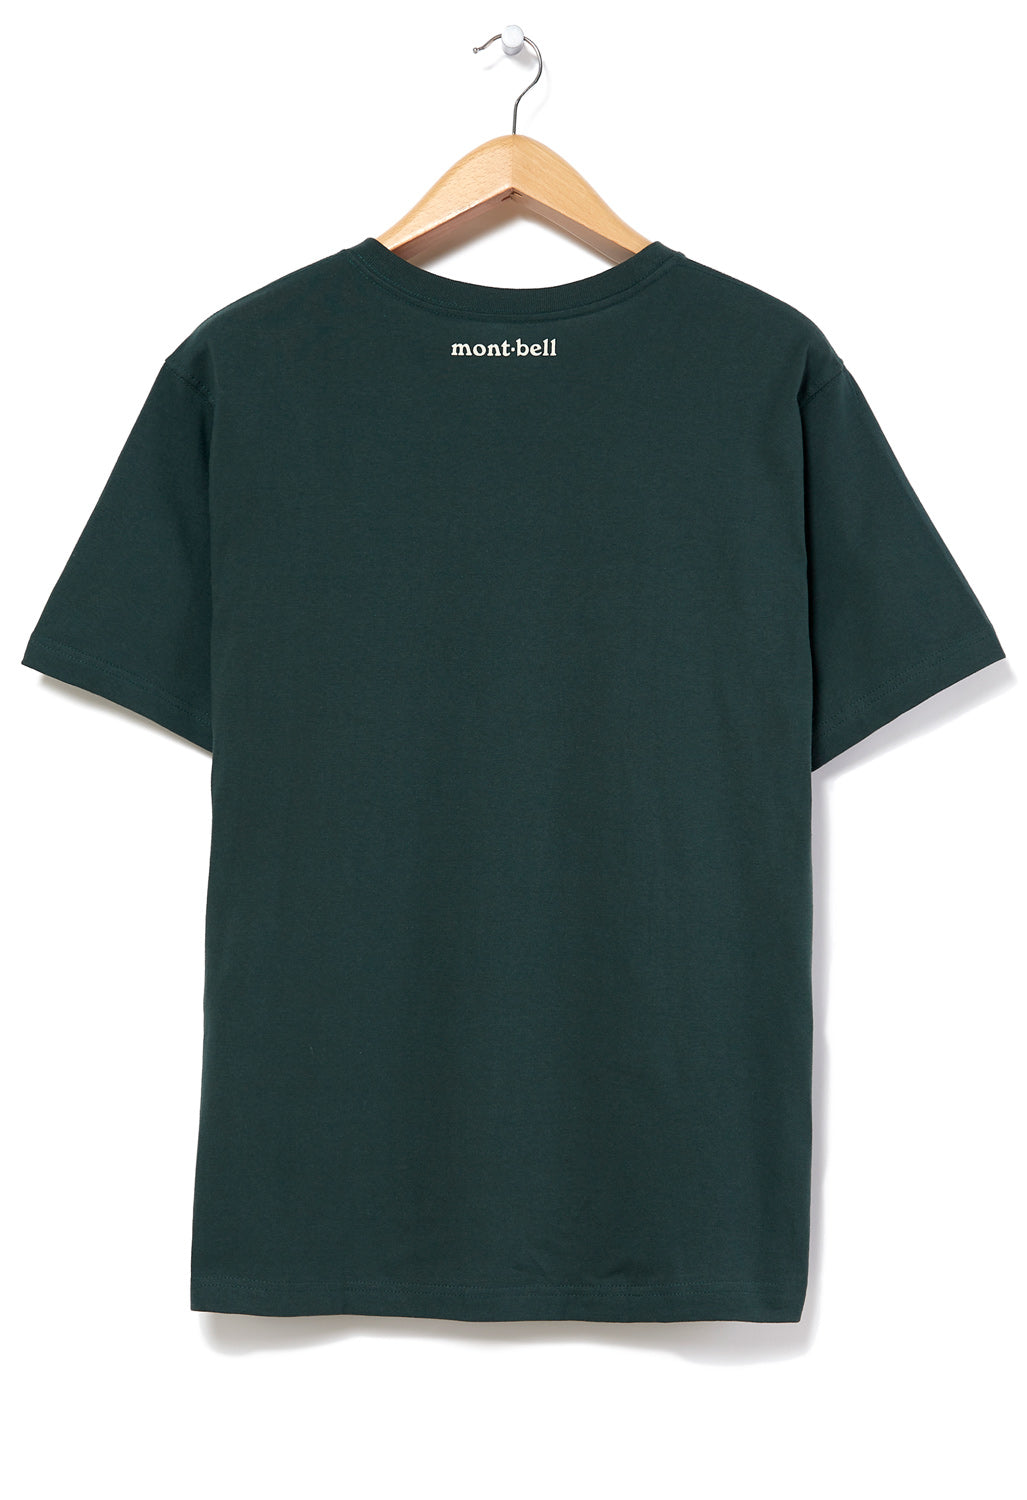 Montbell Pear Skin Cotton mont-bell T-Shirt - Hunter Green